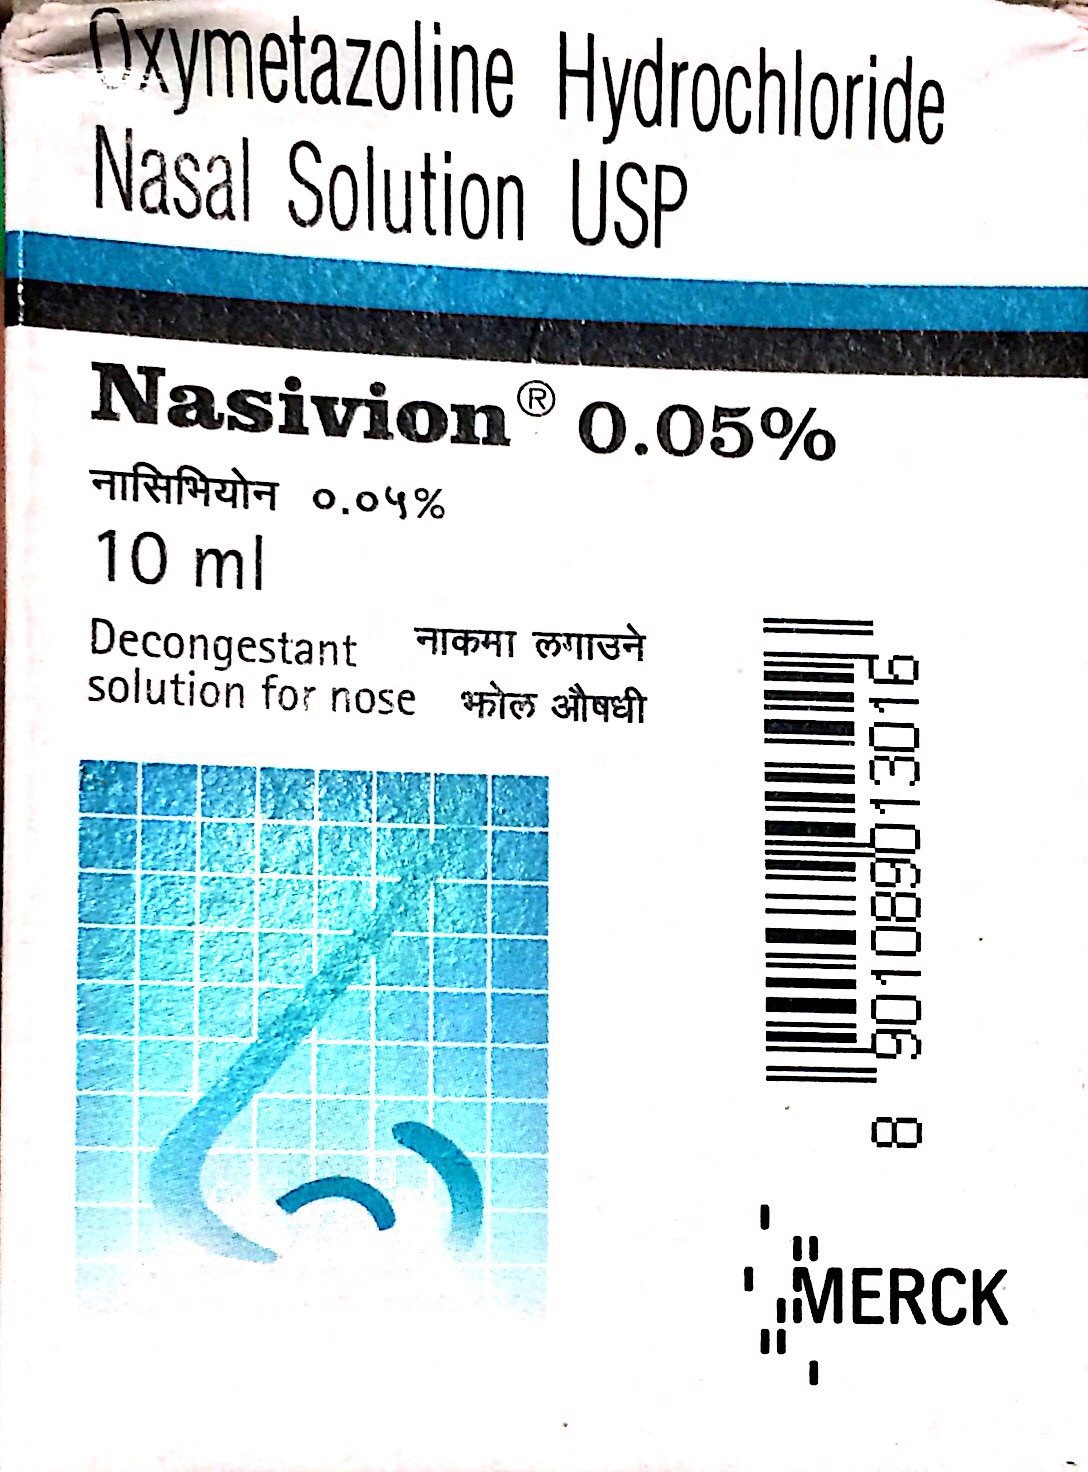 Nasivion-0.05% Adult*hm